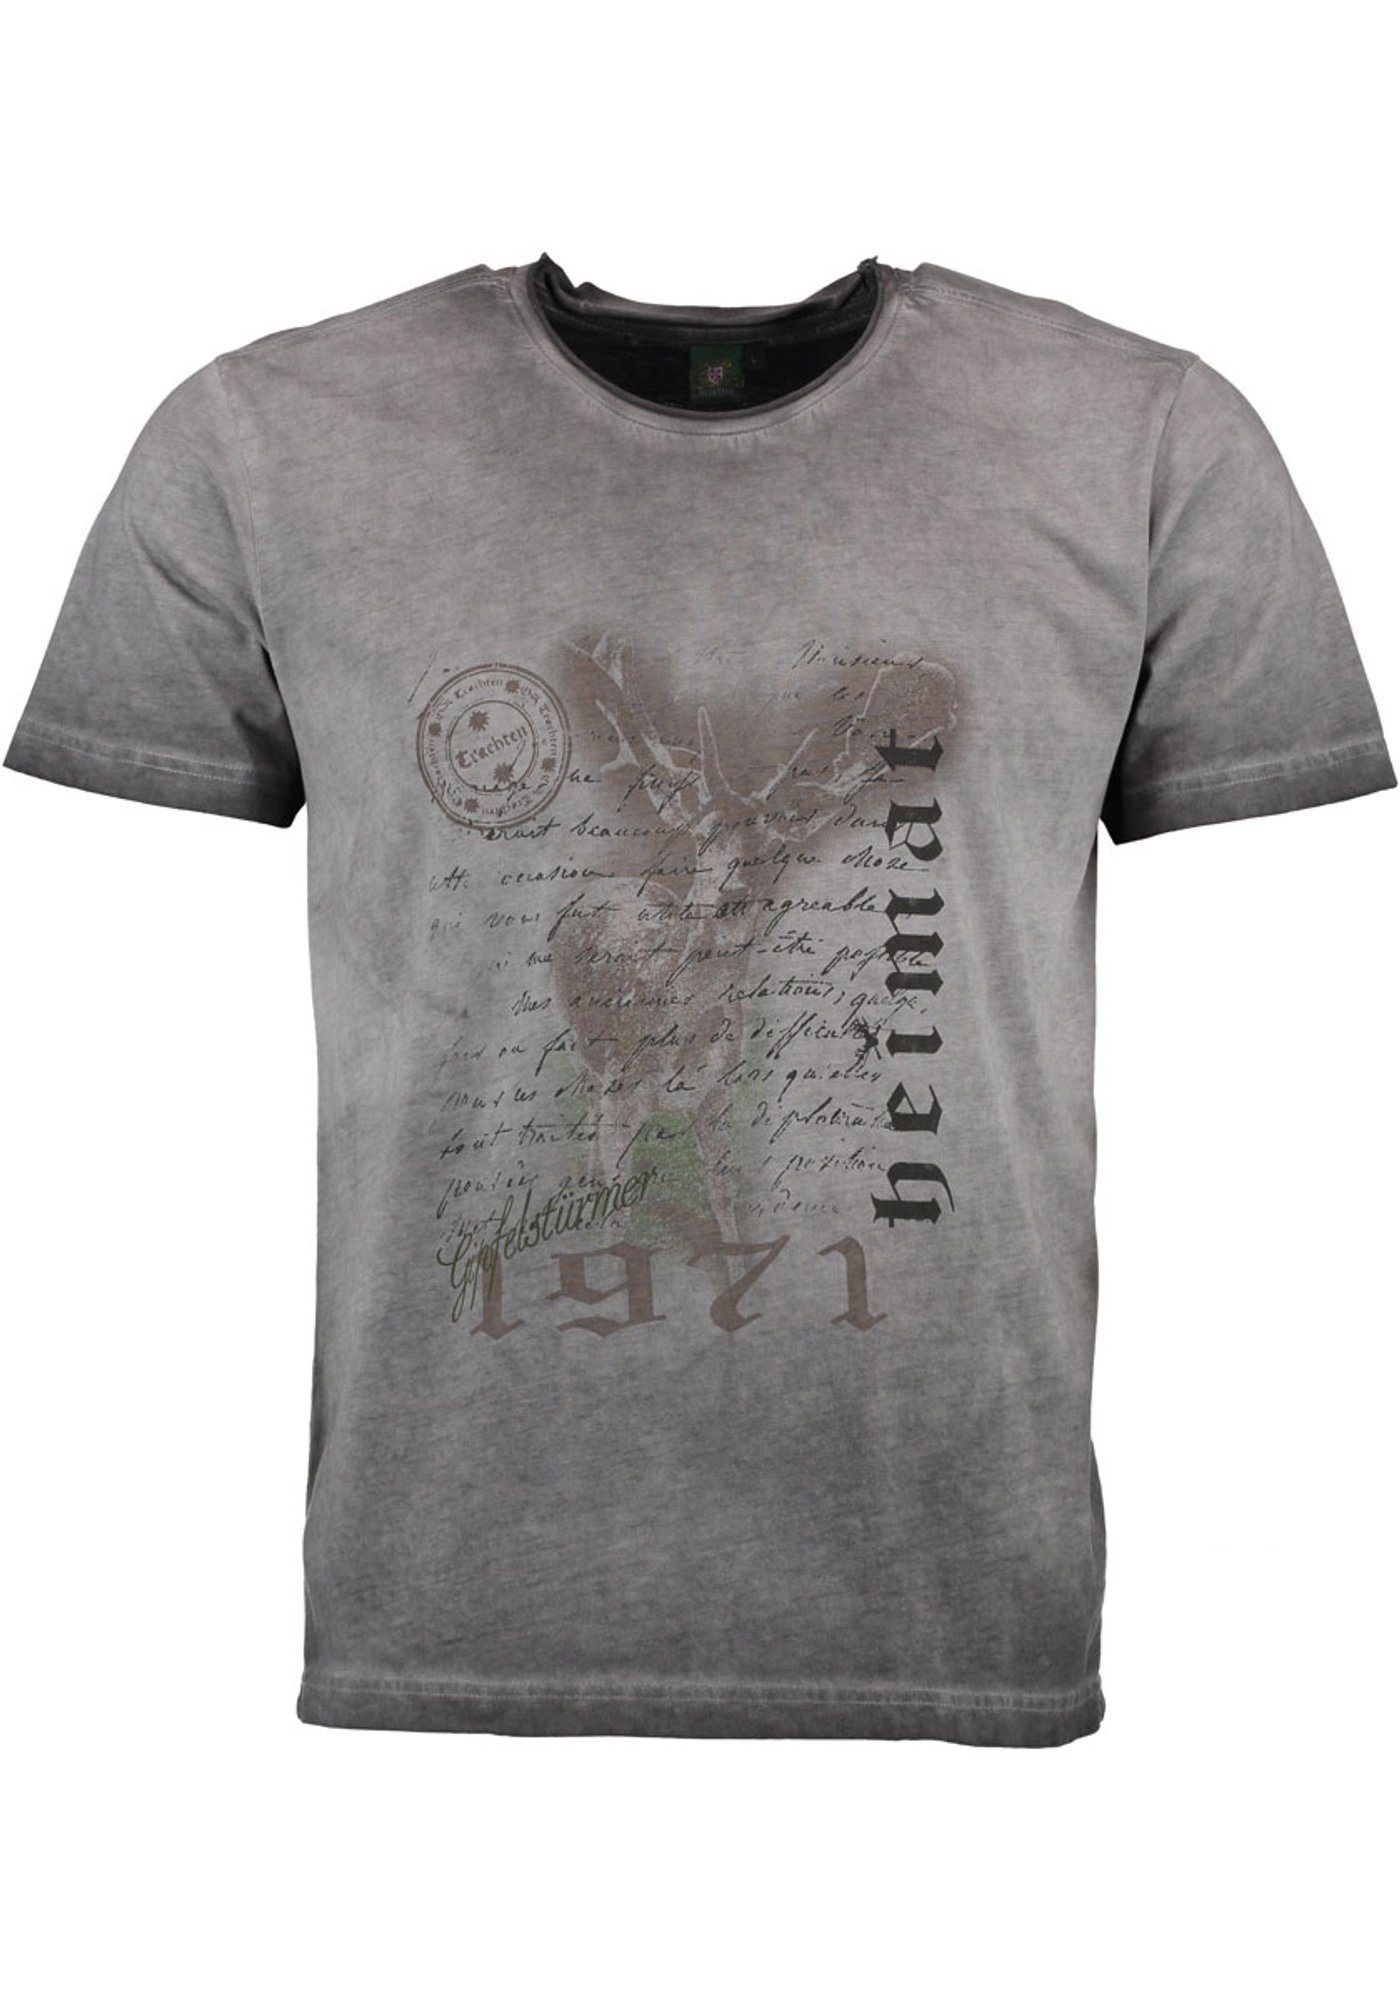 anthrazit OS-Trachten Motivdruck T-Shirt Trachtenshirt mit Ofapuo Kurzarm